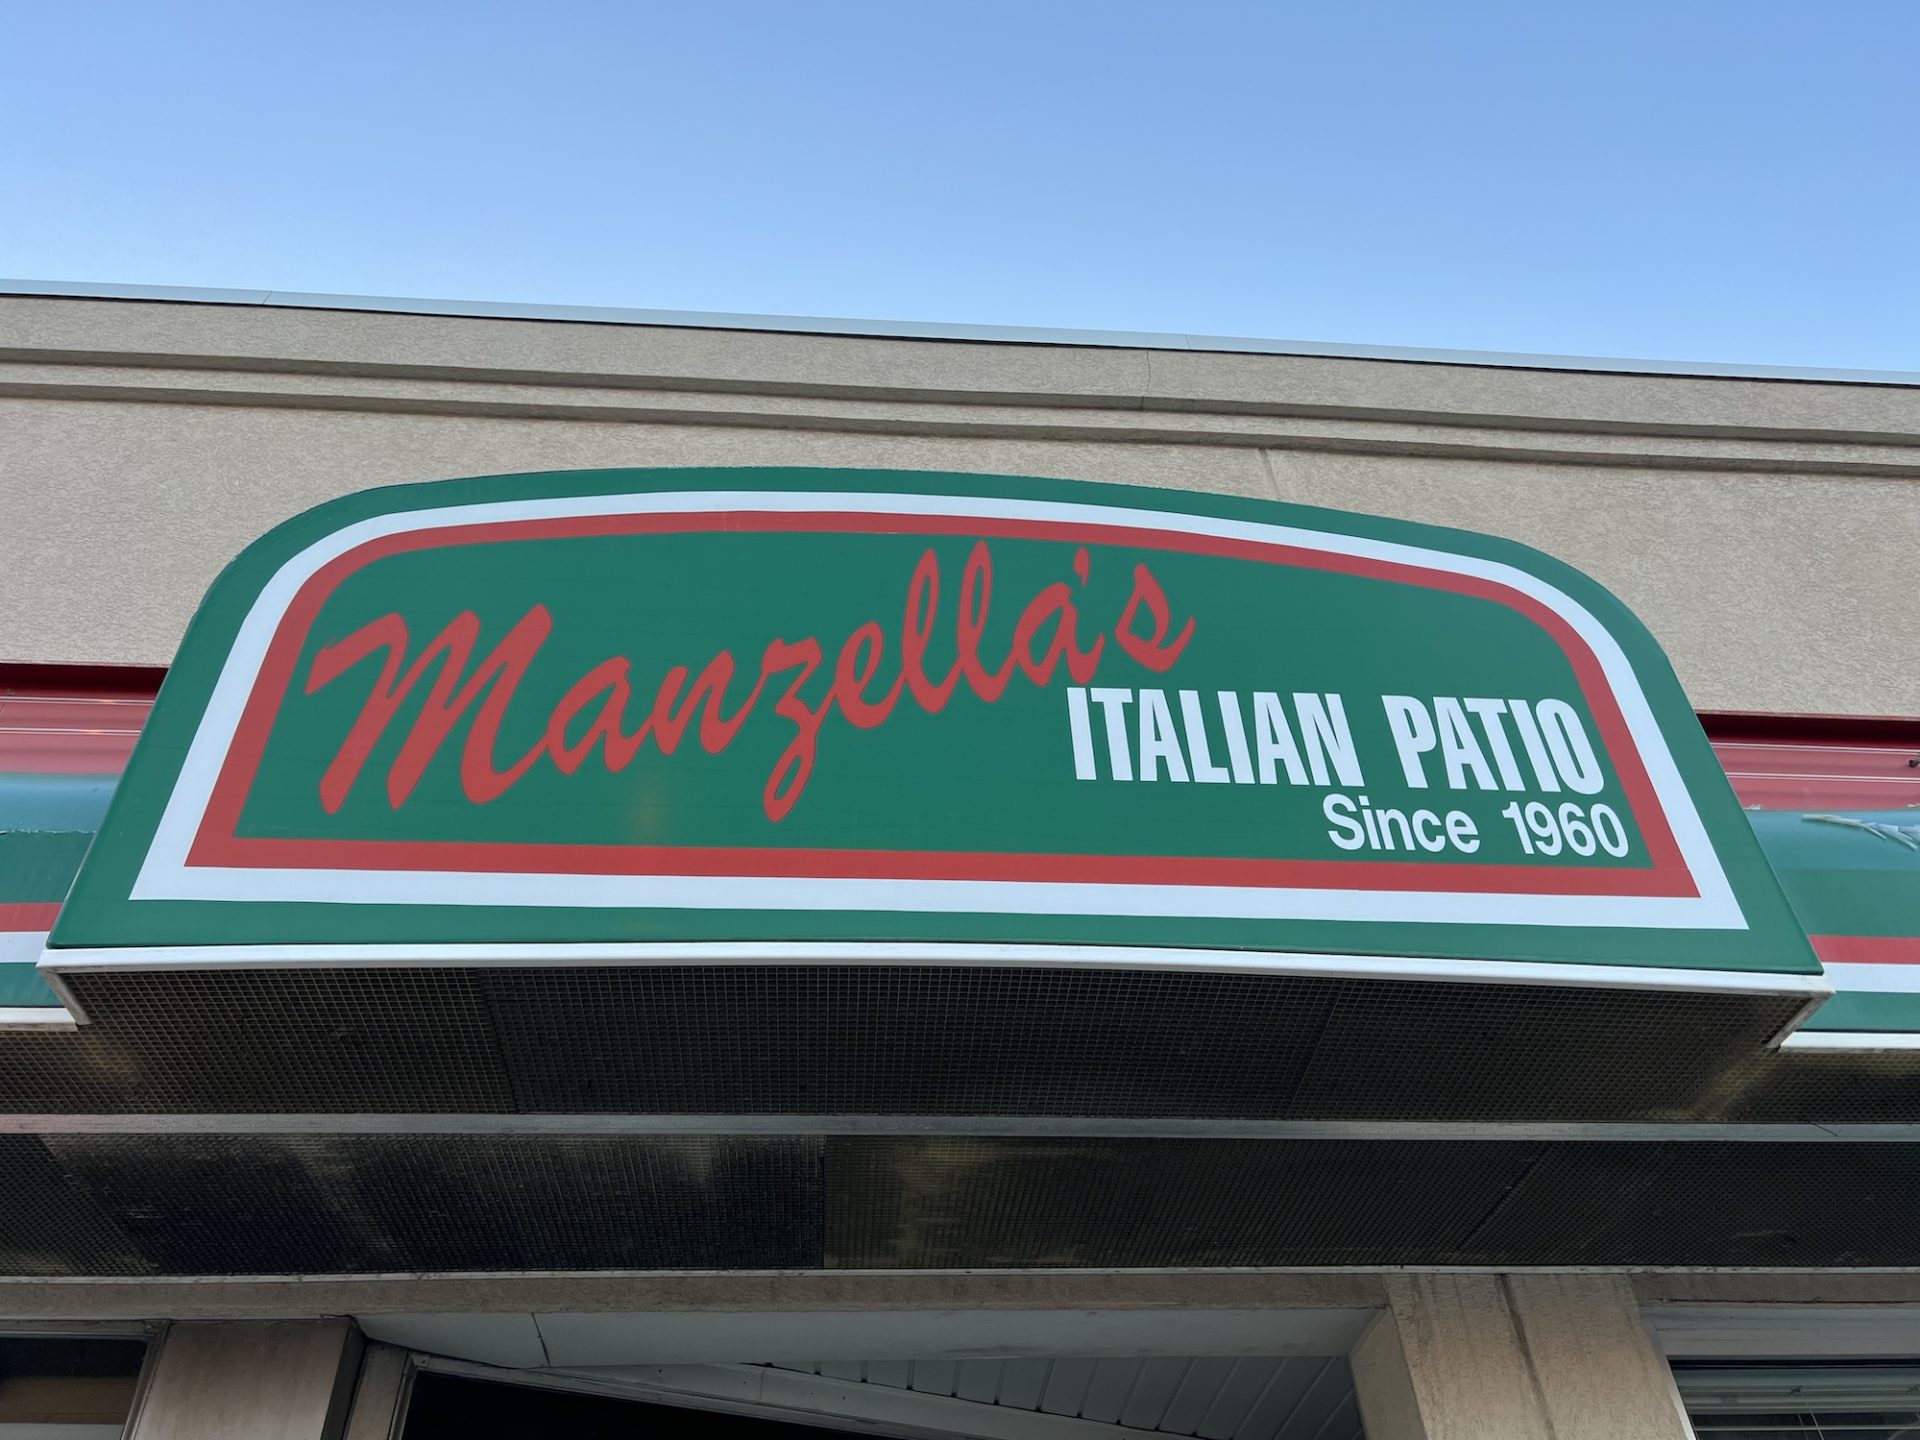 Manzella’s offers classic, old-school Italian